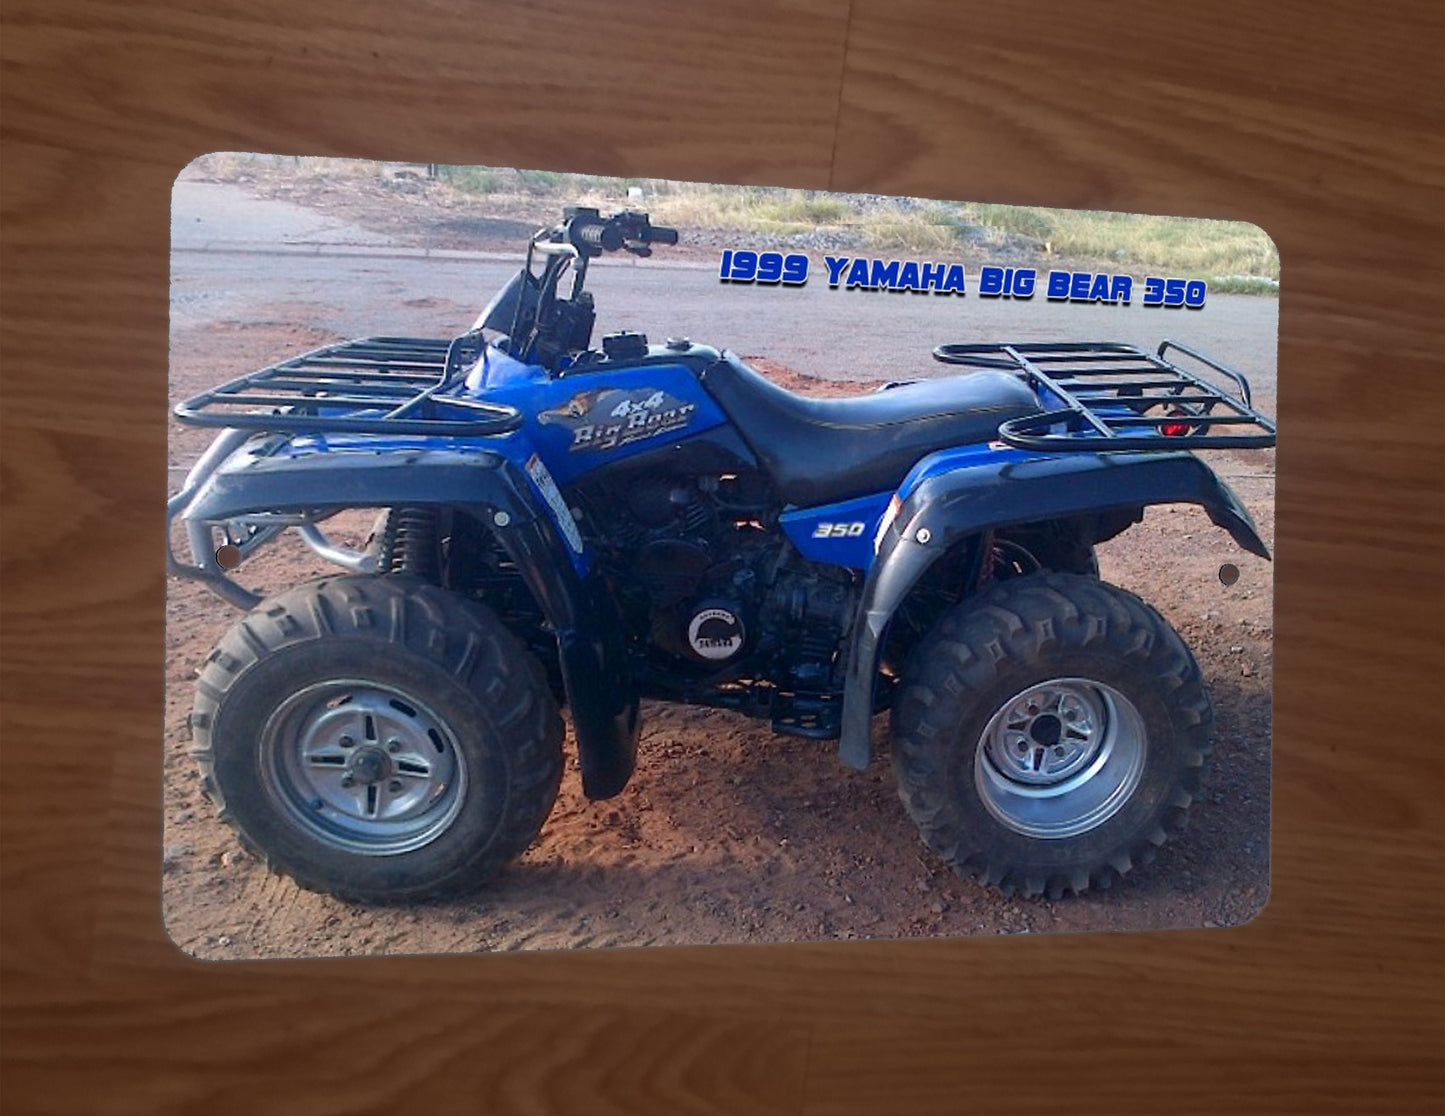 1999 Yamaha Big Bear 350 Blue Quad 4x4 Motor Bike ATV  8x12 Metal Wall Sign Garage Poster